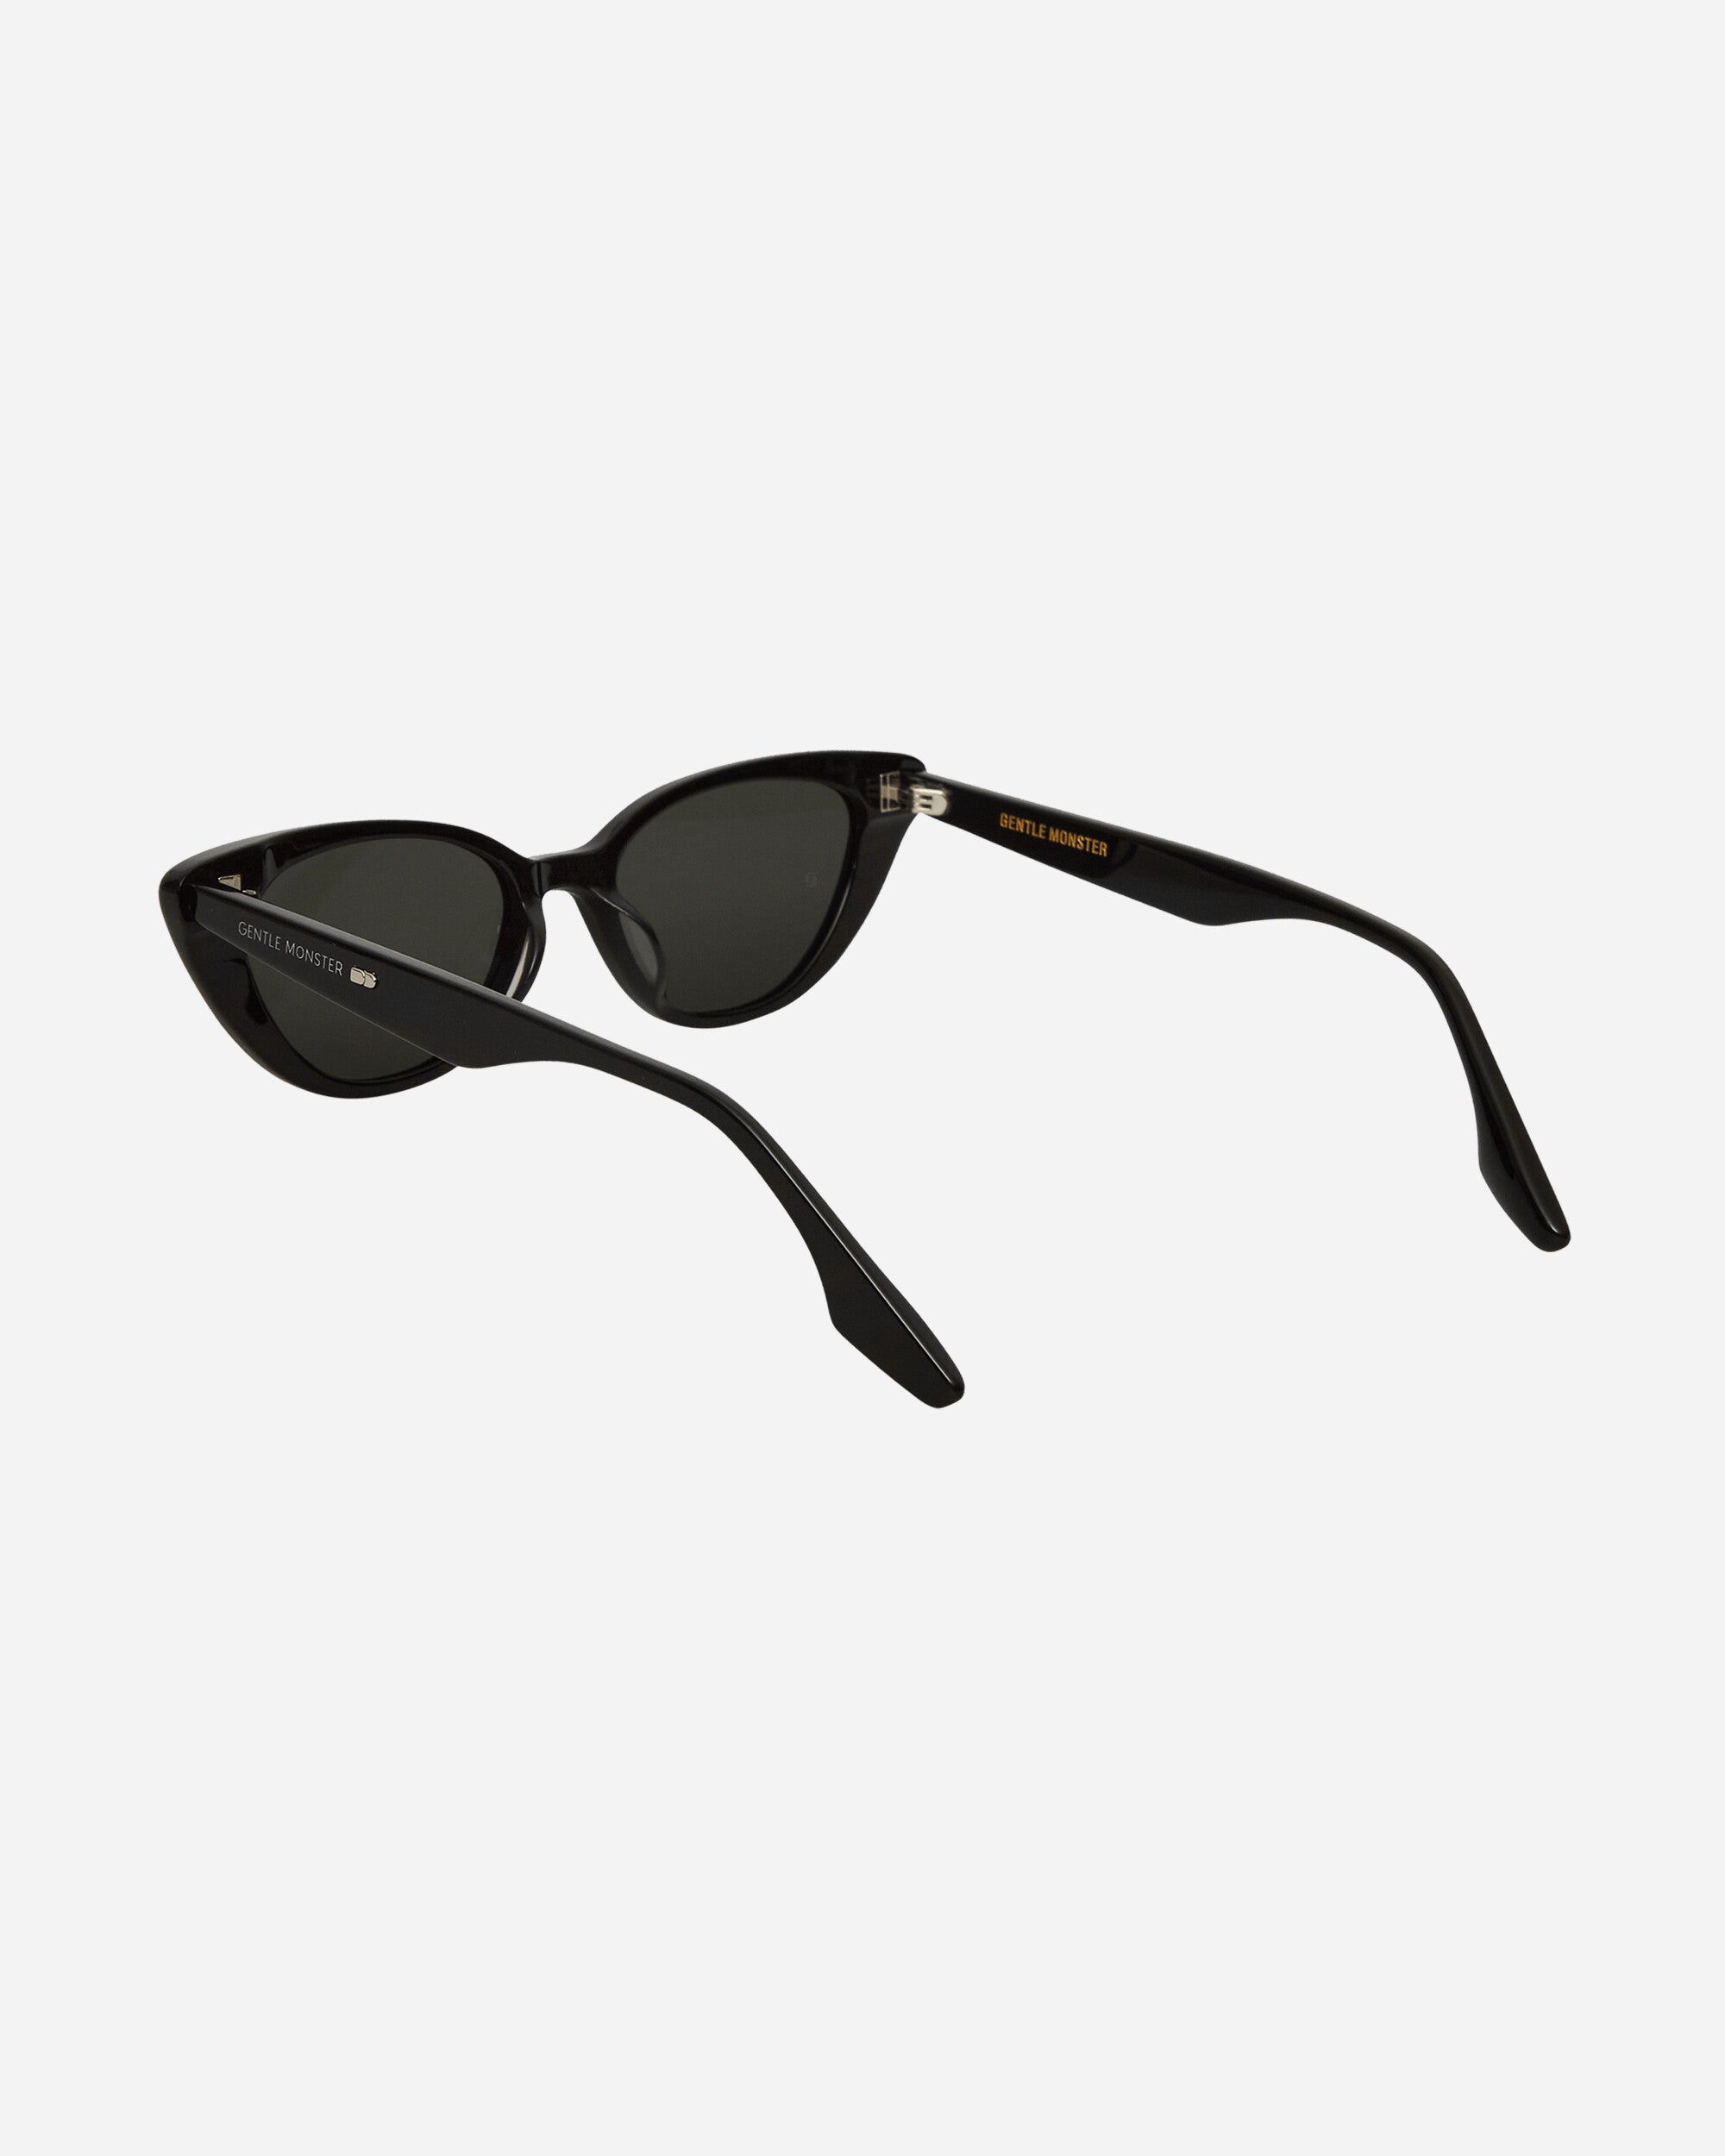 Gentle Monster Crella Black Eyewear Sunglasses CRELLA-01 01